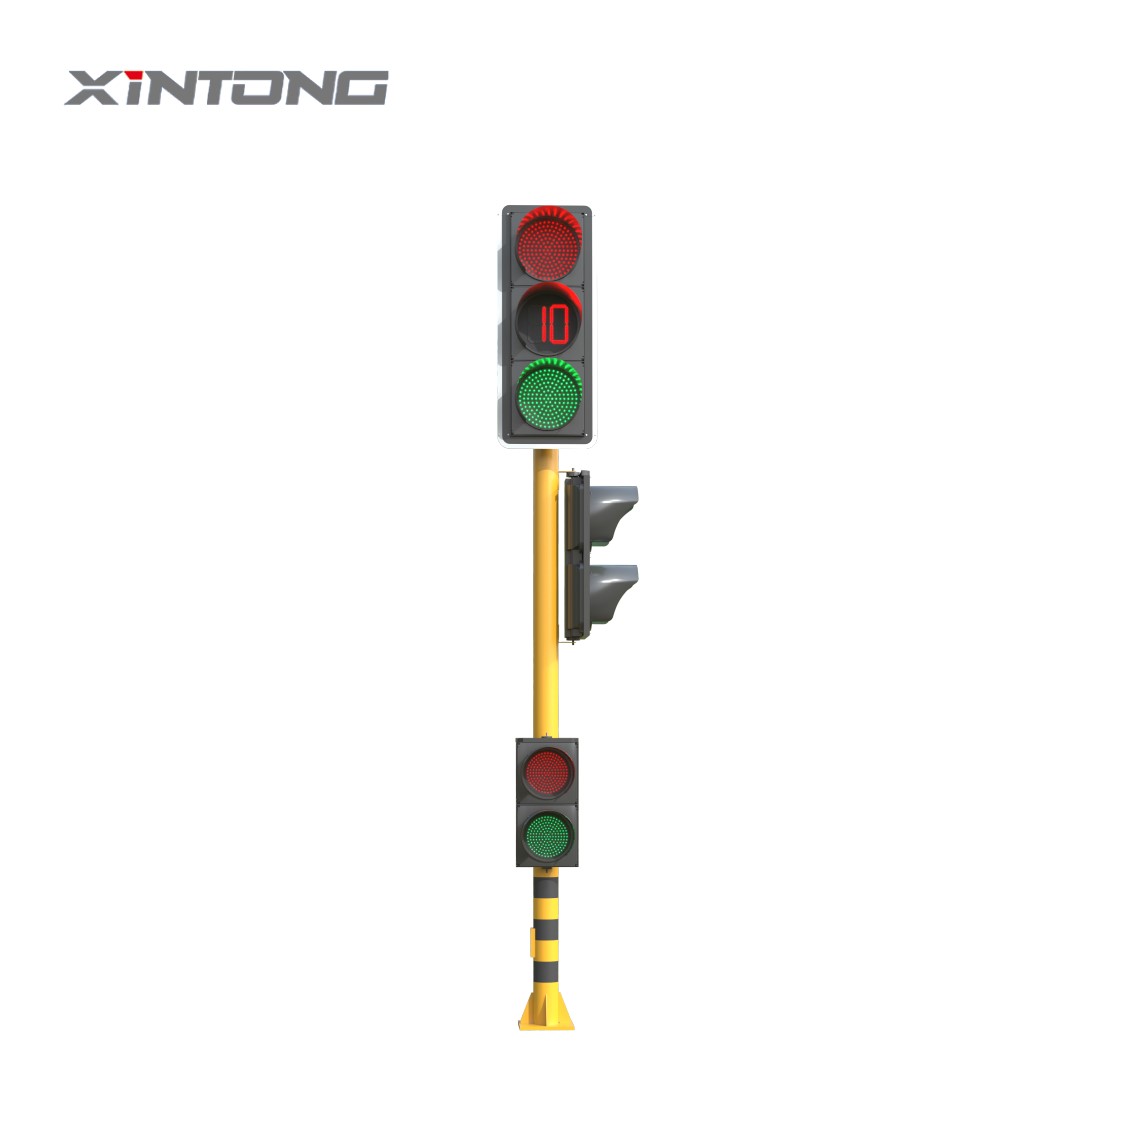 Xintong 300LED Traffic Crossroad Signal Light